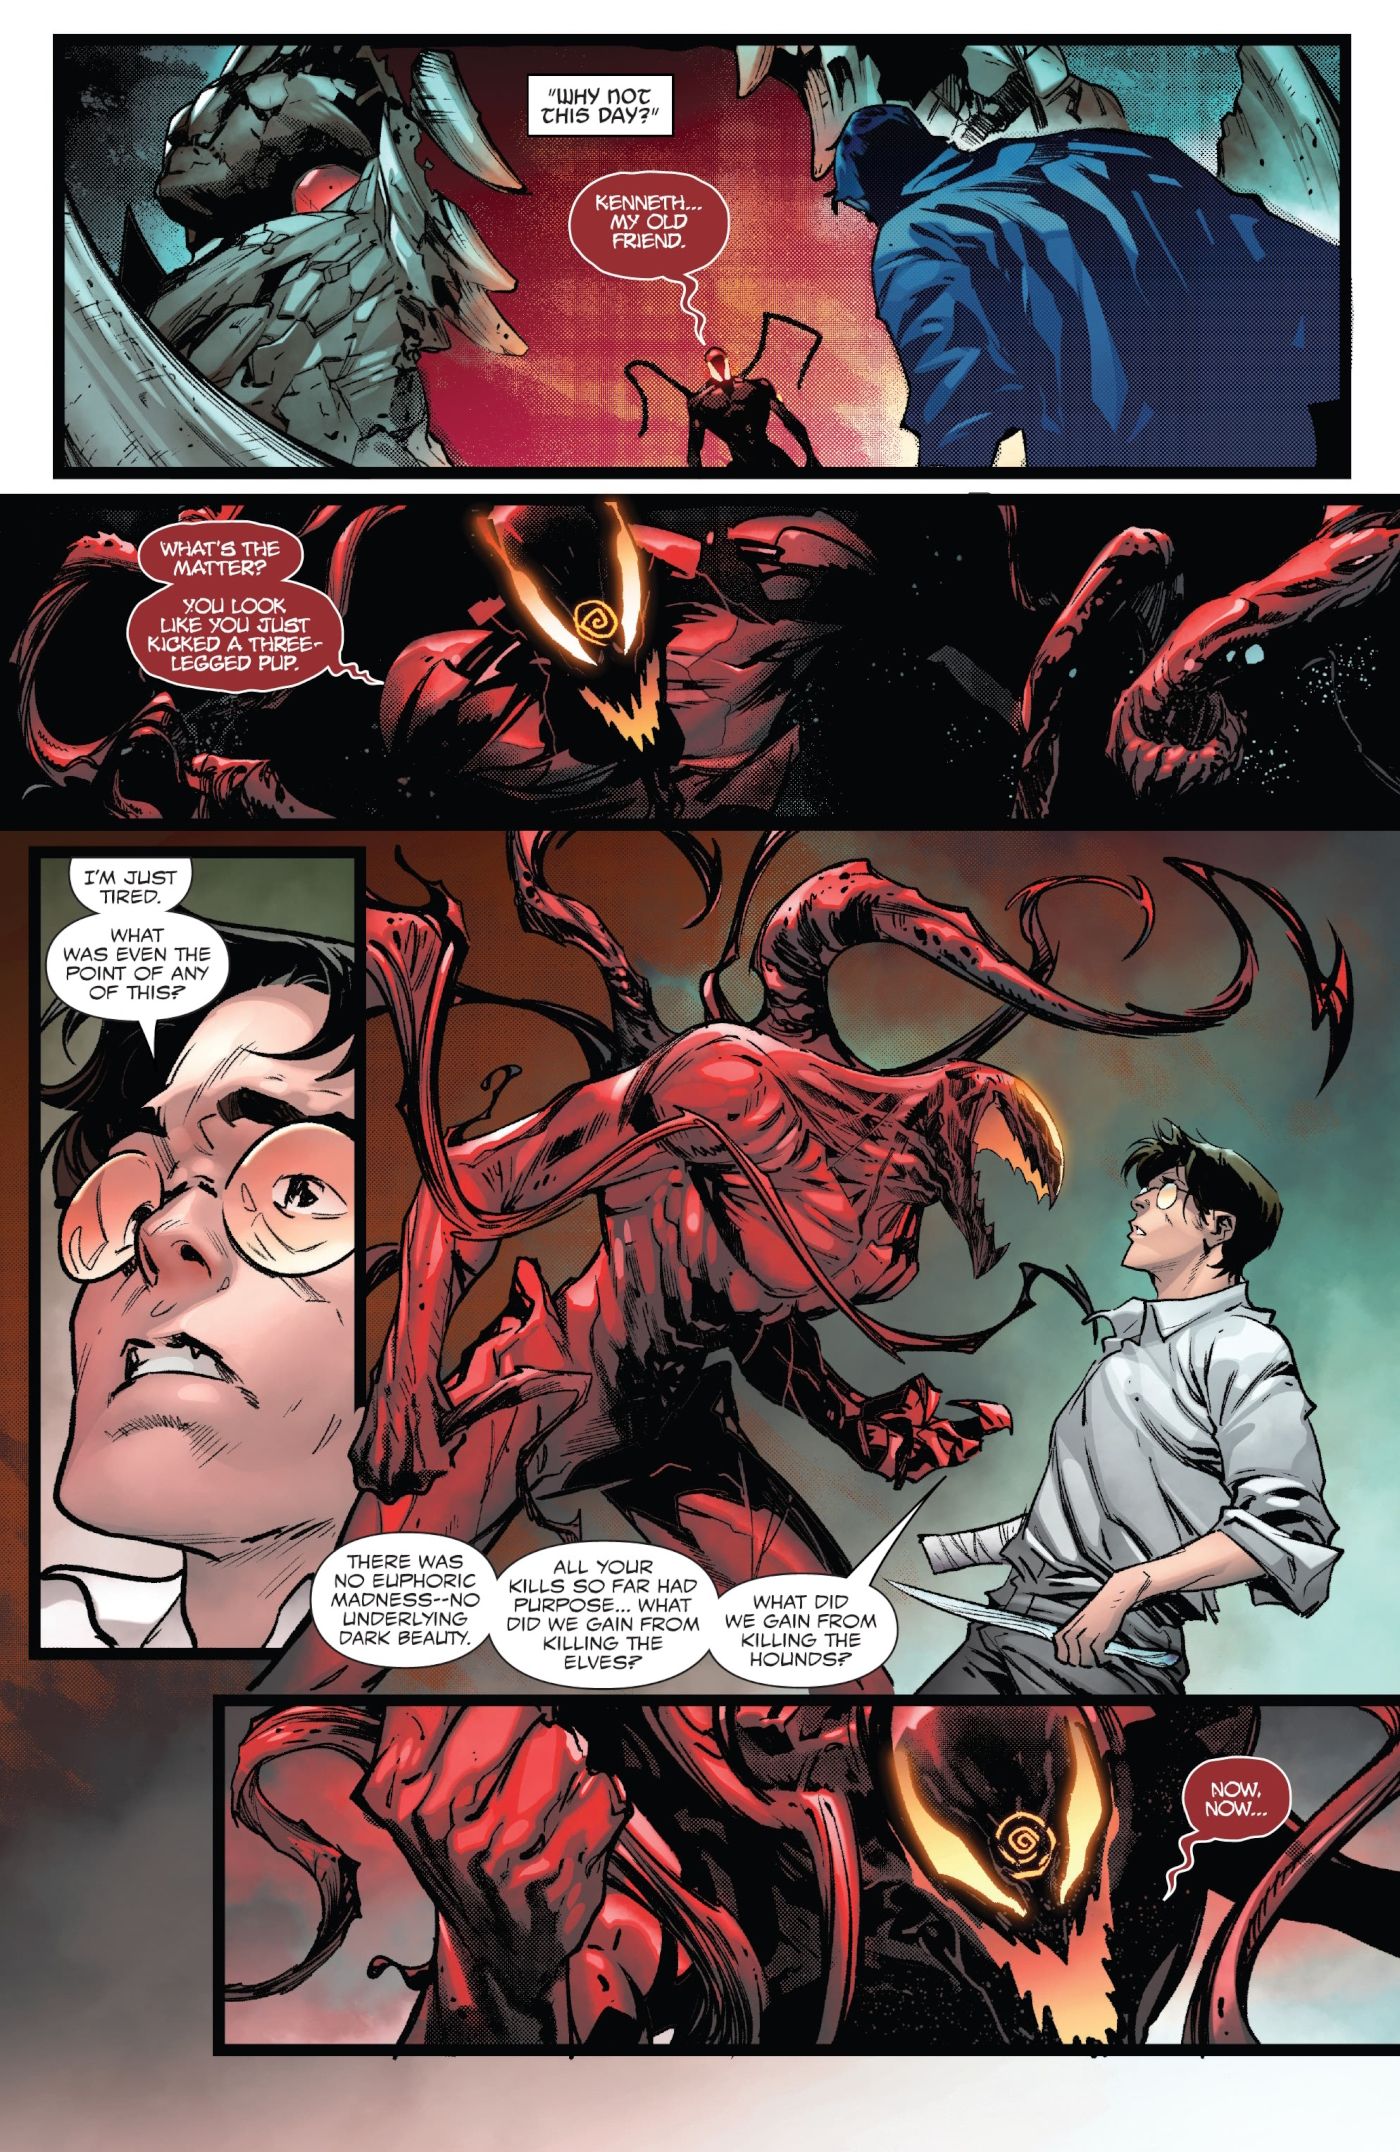 “The Helhound”: Carnage’s New Sidekick Is Already One of Marvel’s Most Powerful Symbiotes